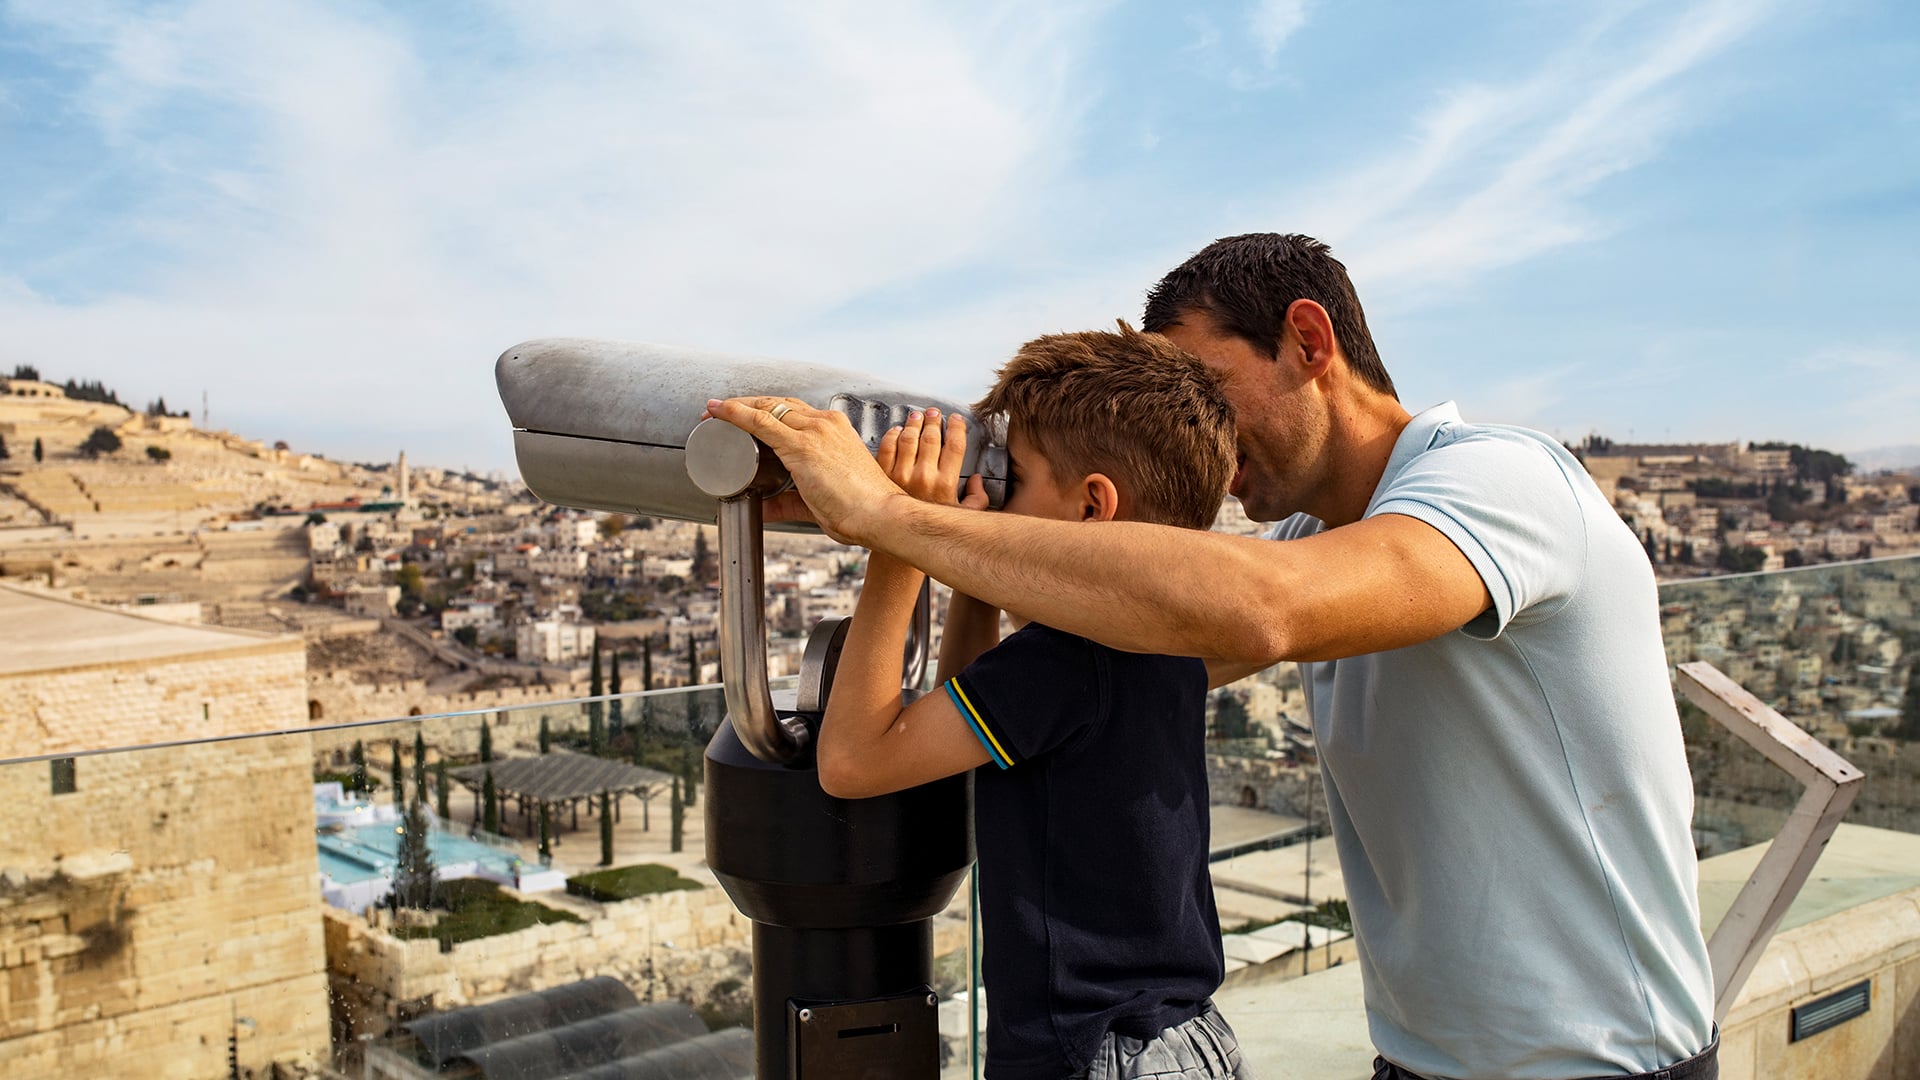 Inbal Hotel invites you to enjoy 5 authentic Jerusalem experiences